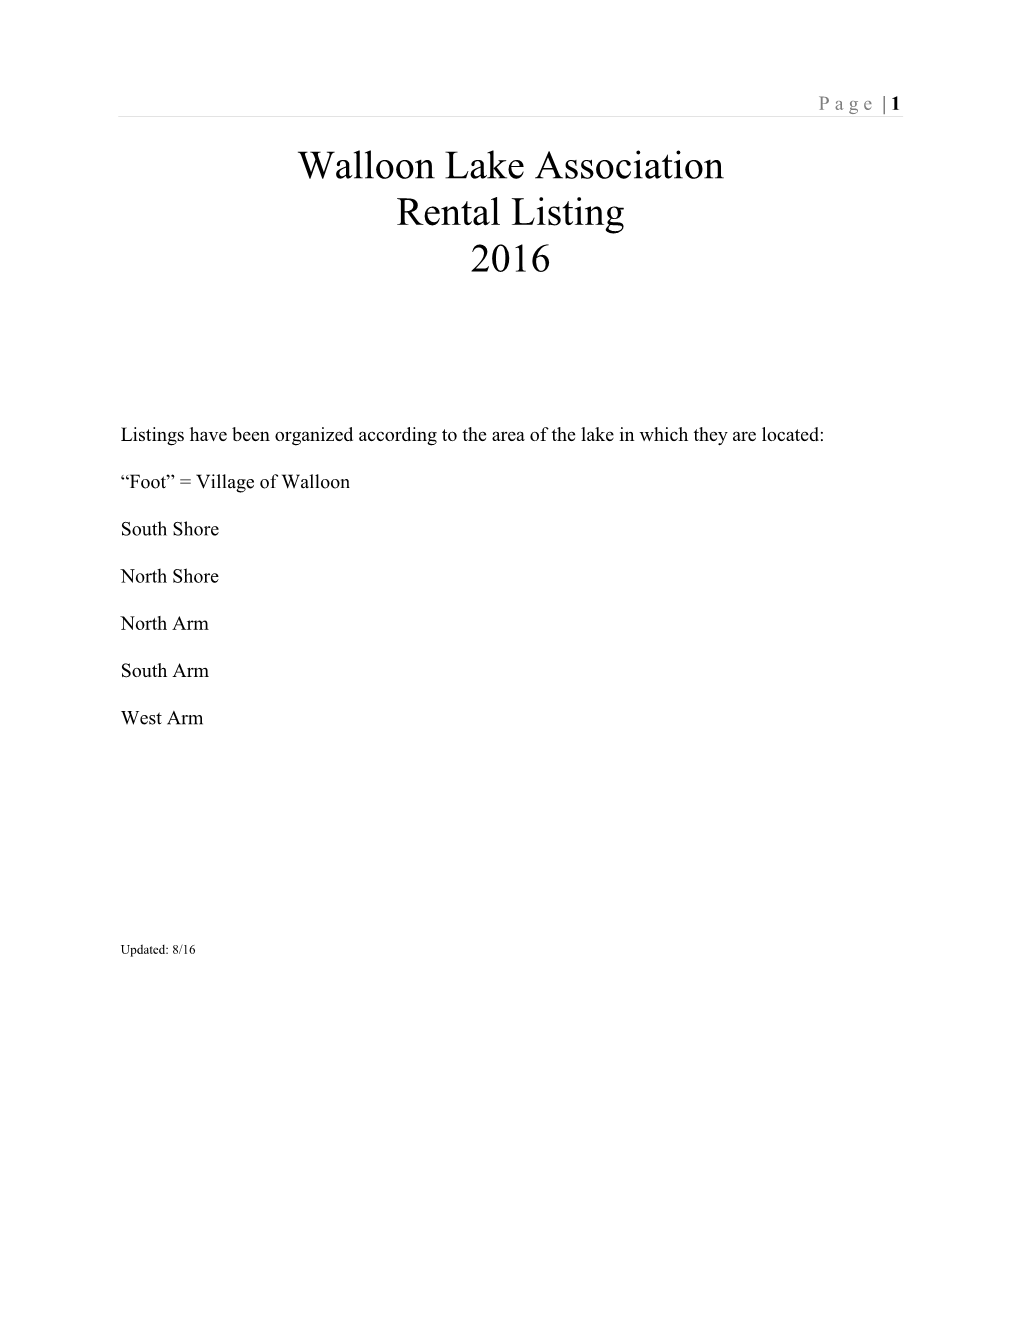 Walloon Lake Association Rental Listing 2016